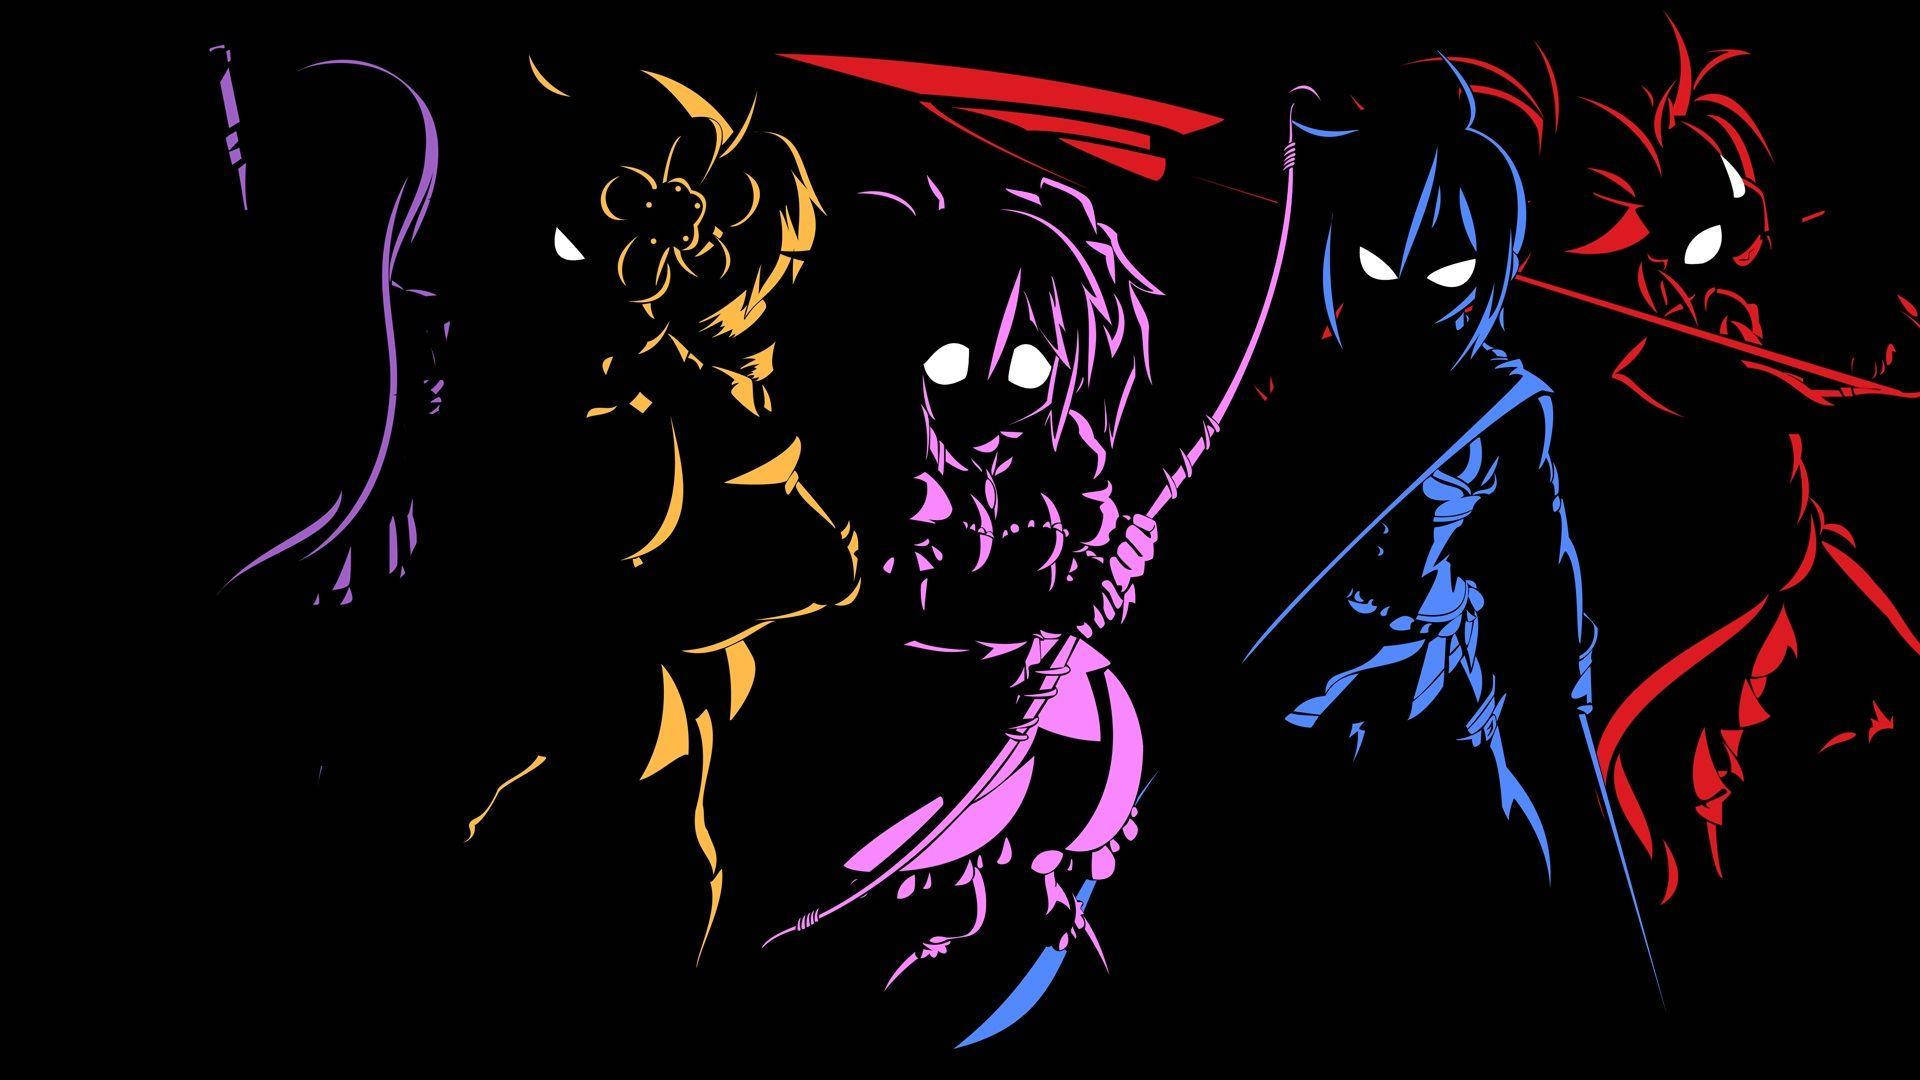 Siluetade Personaje De Anime Oscuro Y Colorido Fondo de pantalla